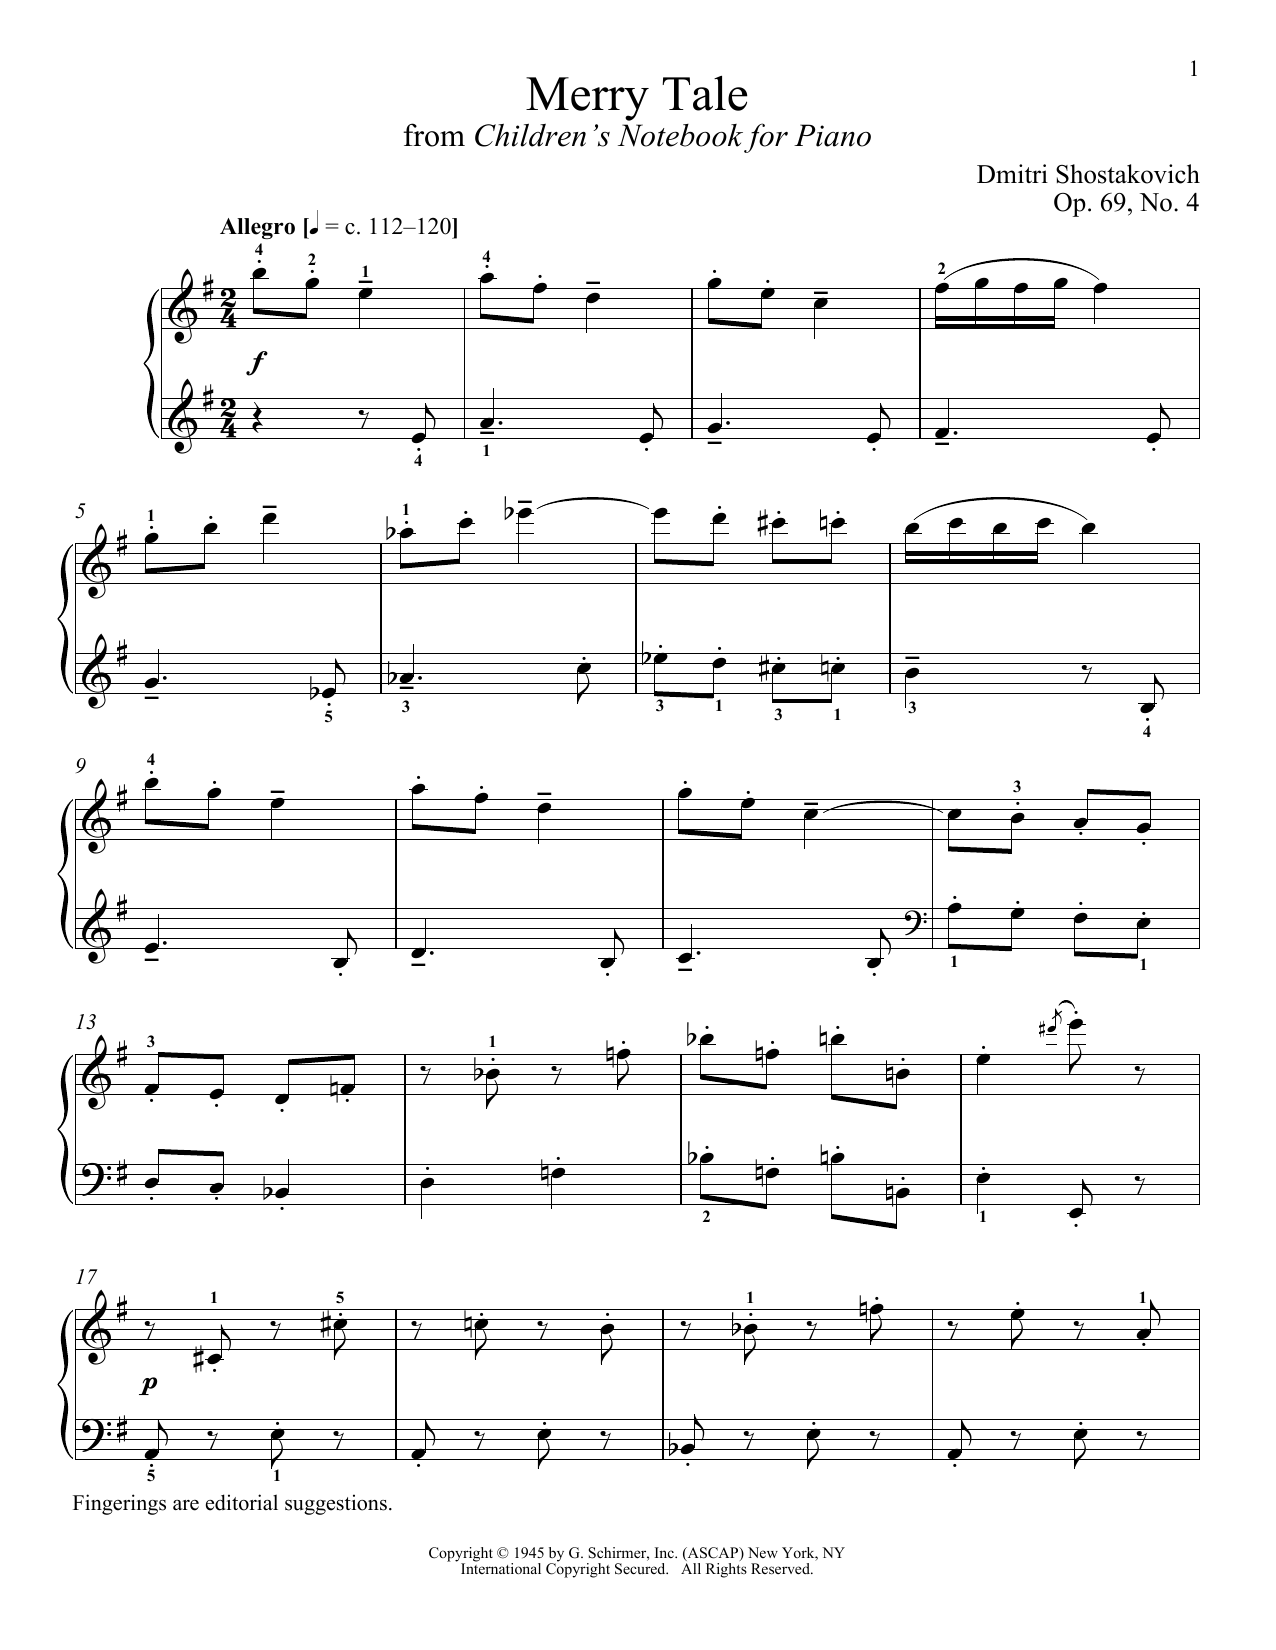 Download Dmitri Shostakovich Merry Tale Sheet Music